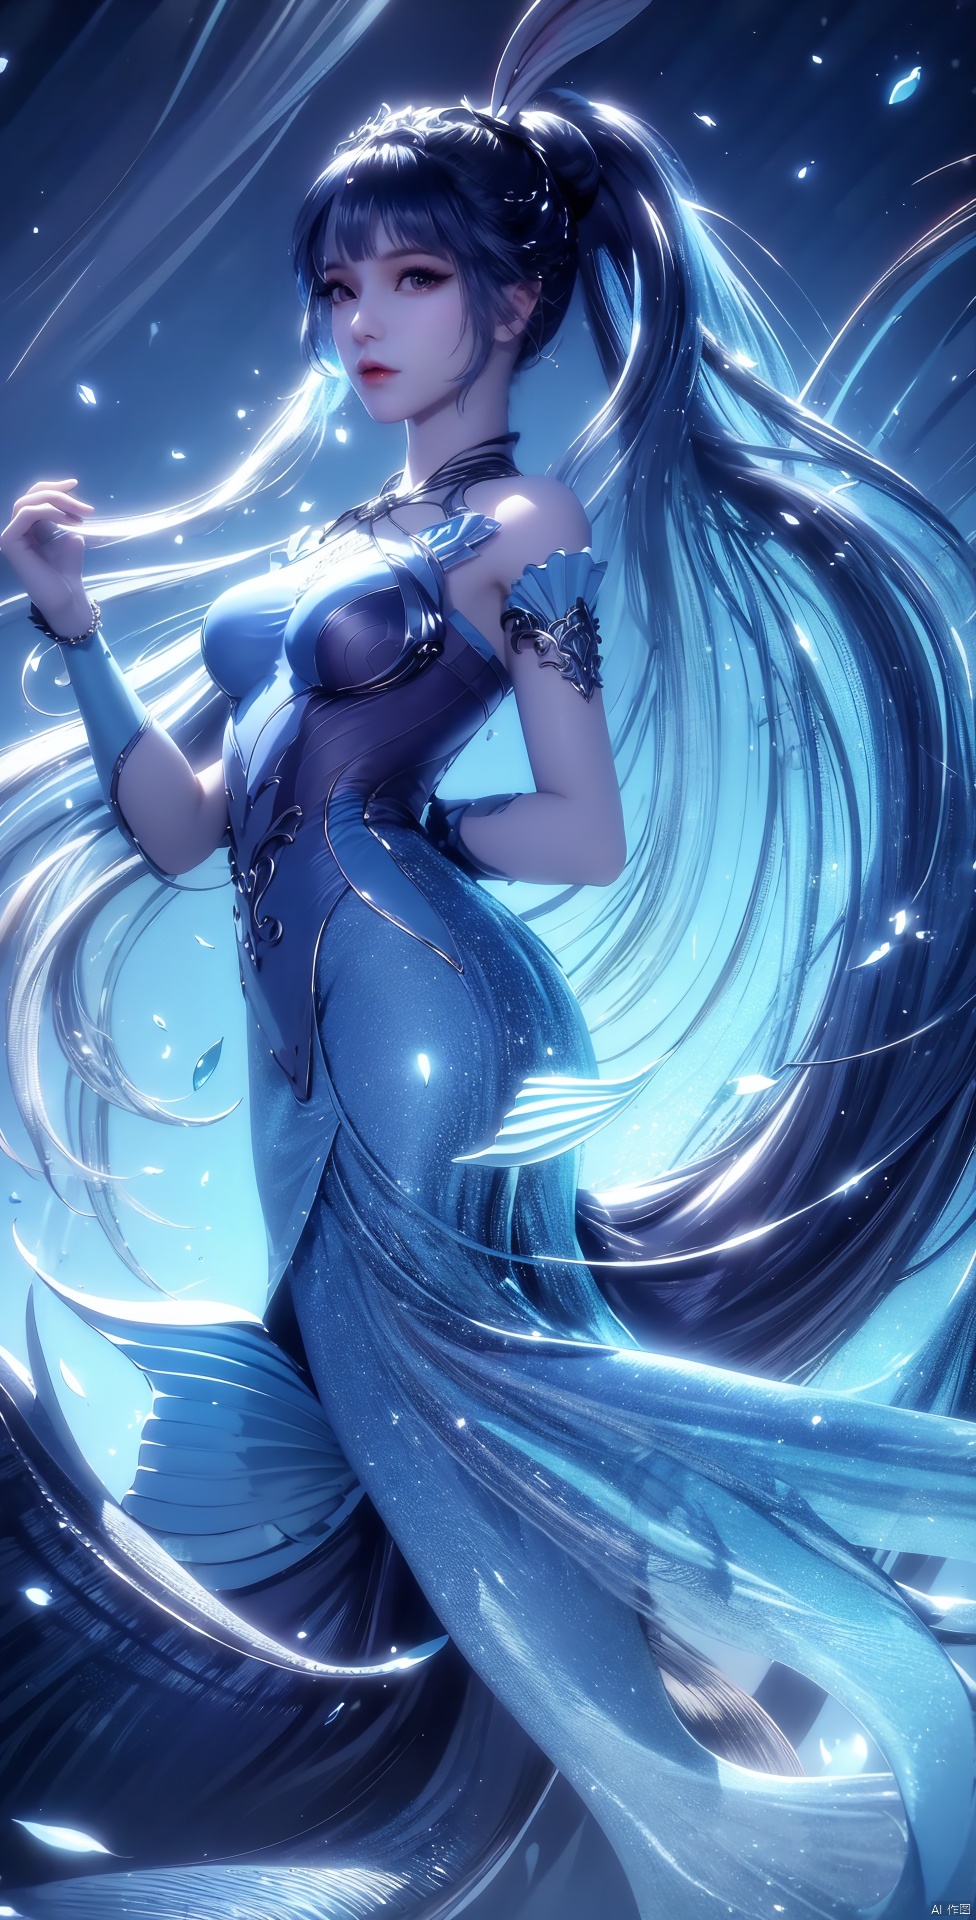 blue hair,blue hair,blue hair
,HD quality, half body, mermaid features, blue mermaid costume, mermaid tears, long blue hair, blue eyes, mermaid, 1 girl, xwhd